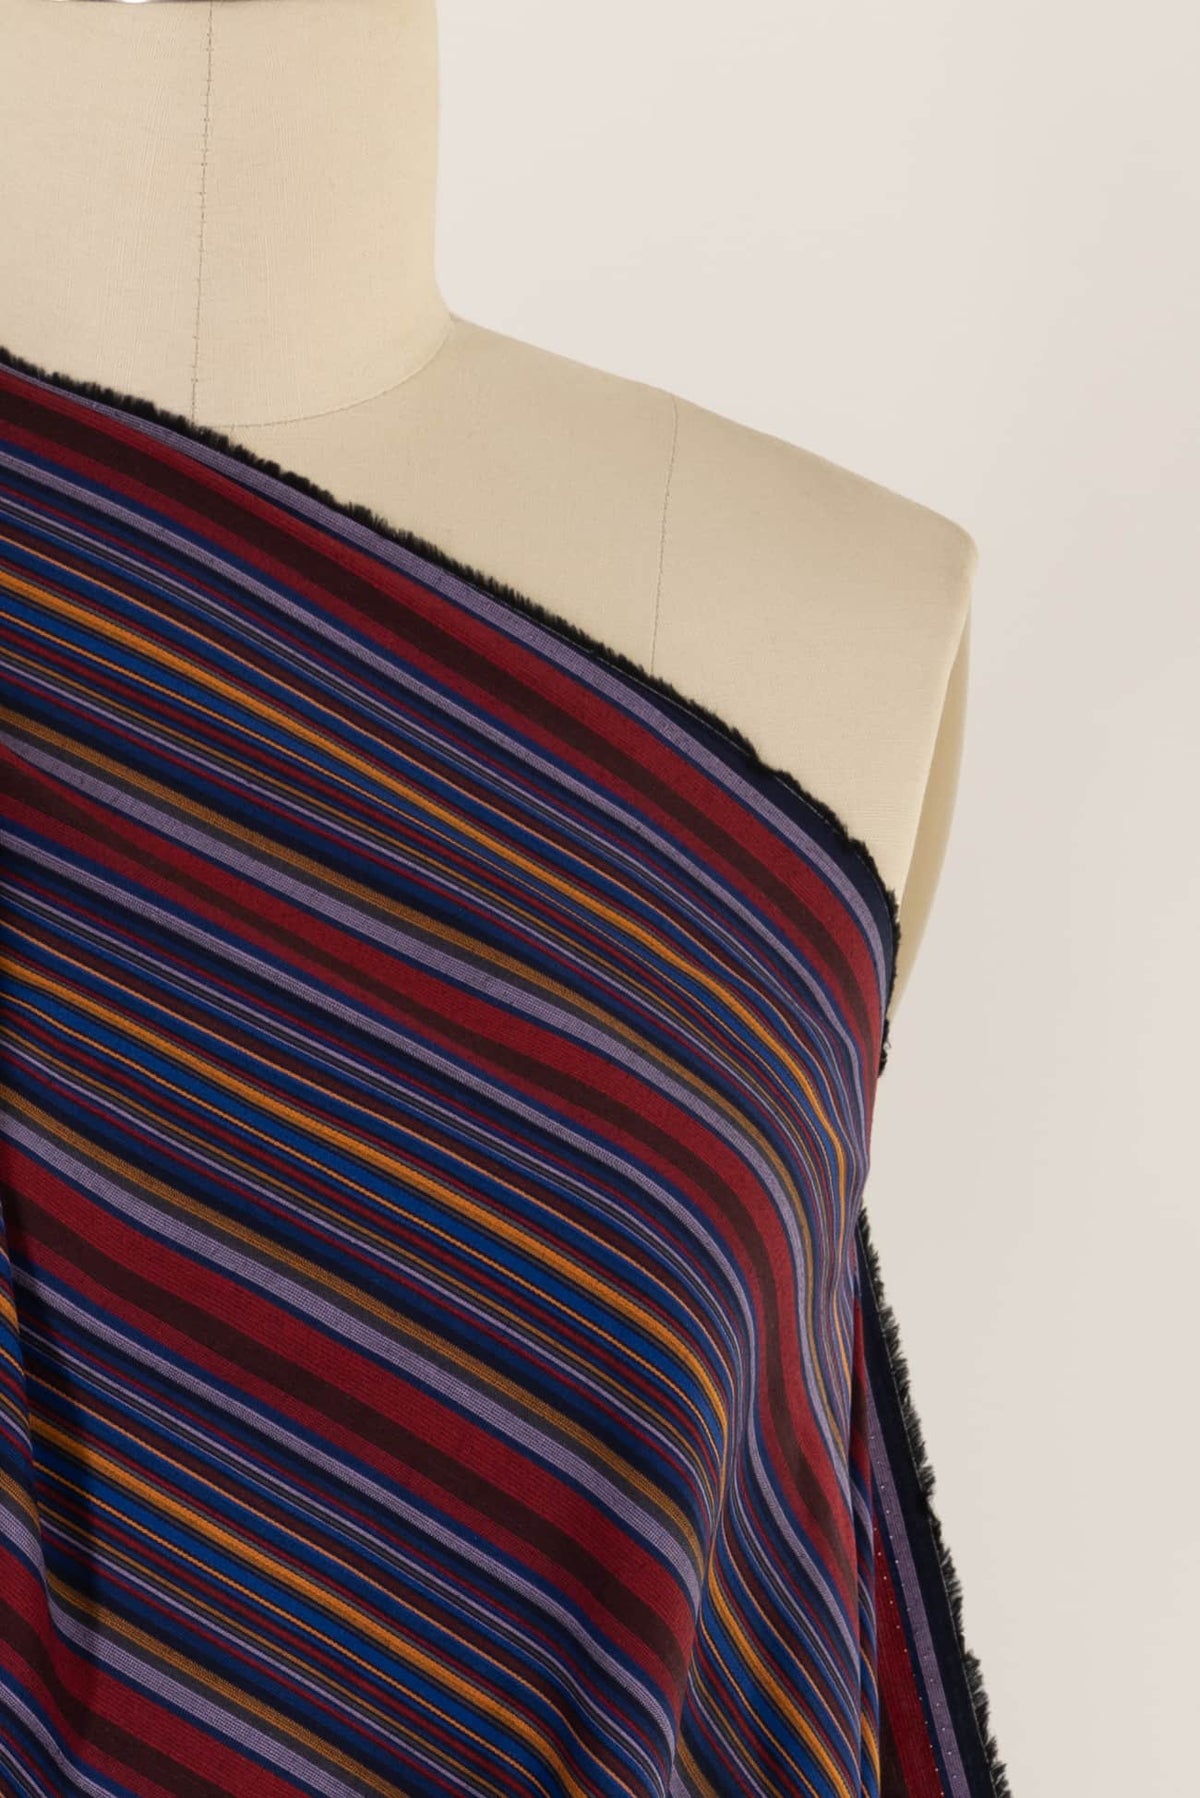 Olema Stripes Japanese Cotton Woven